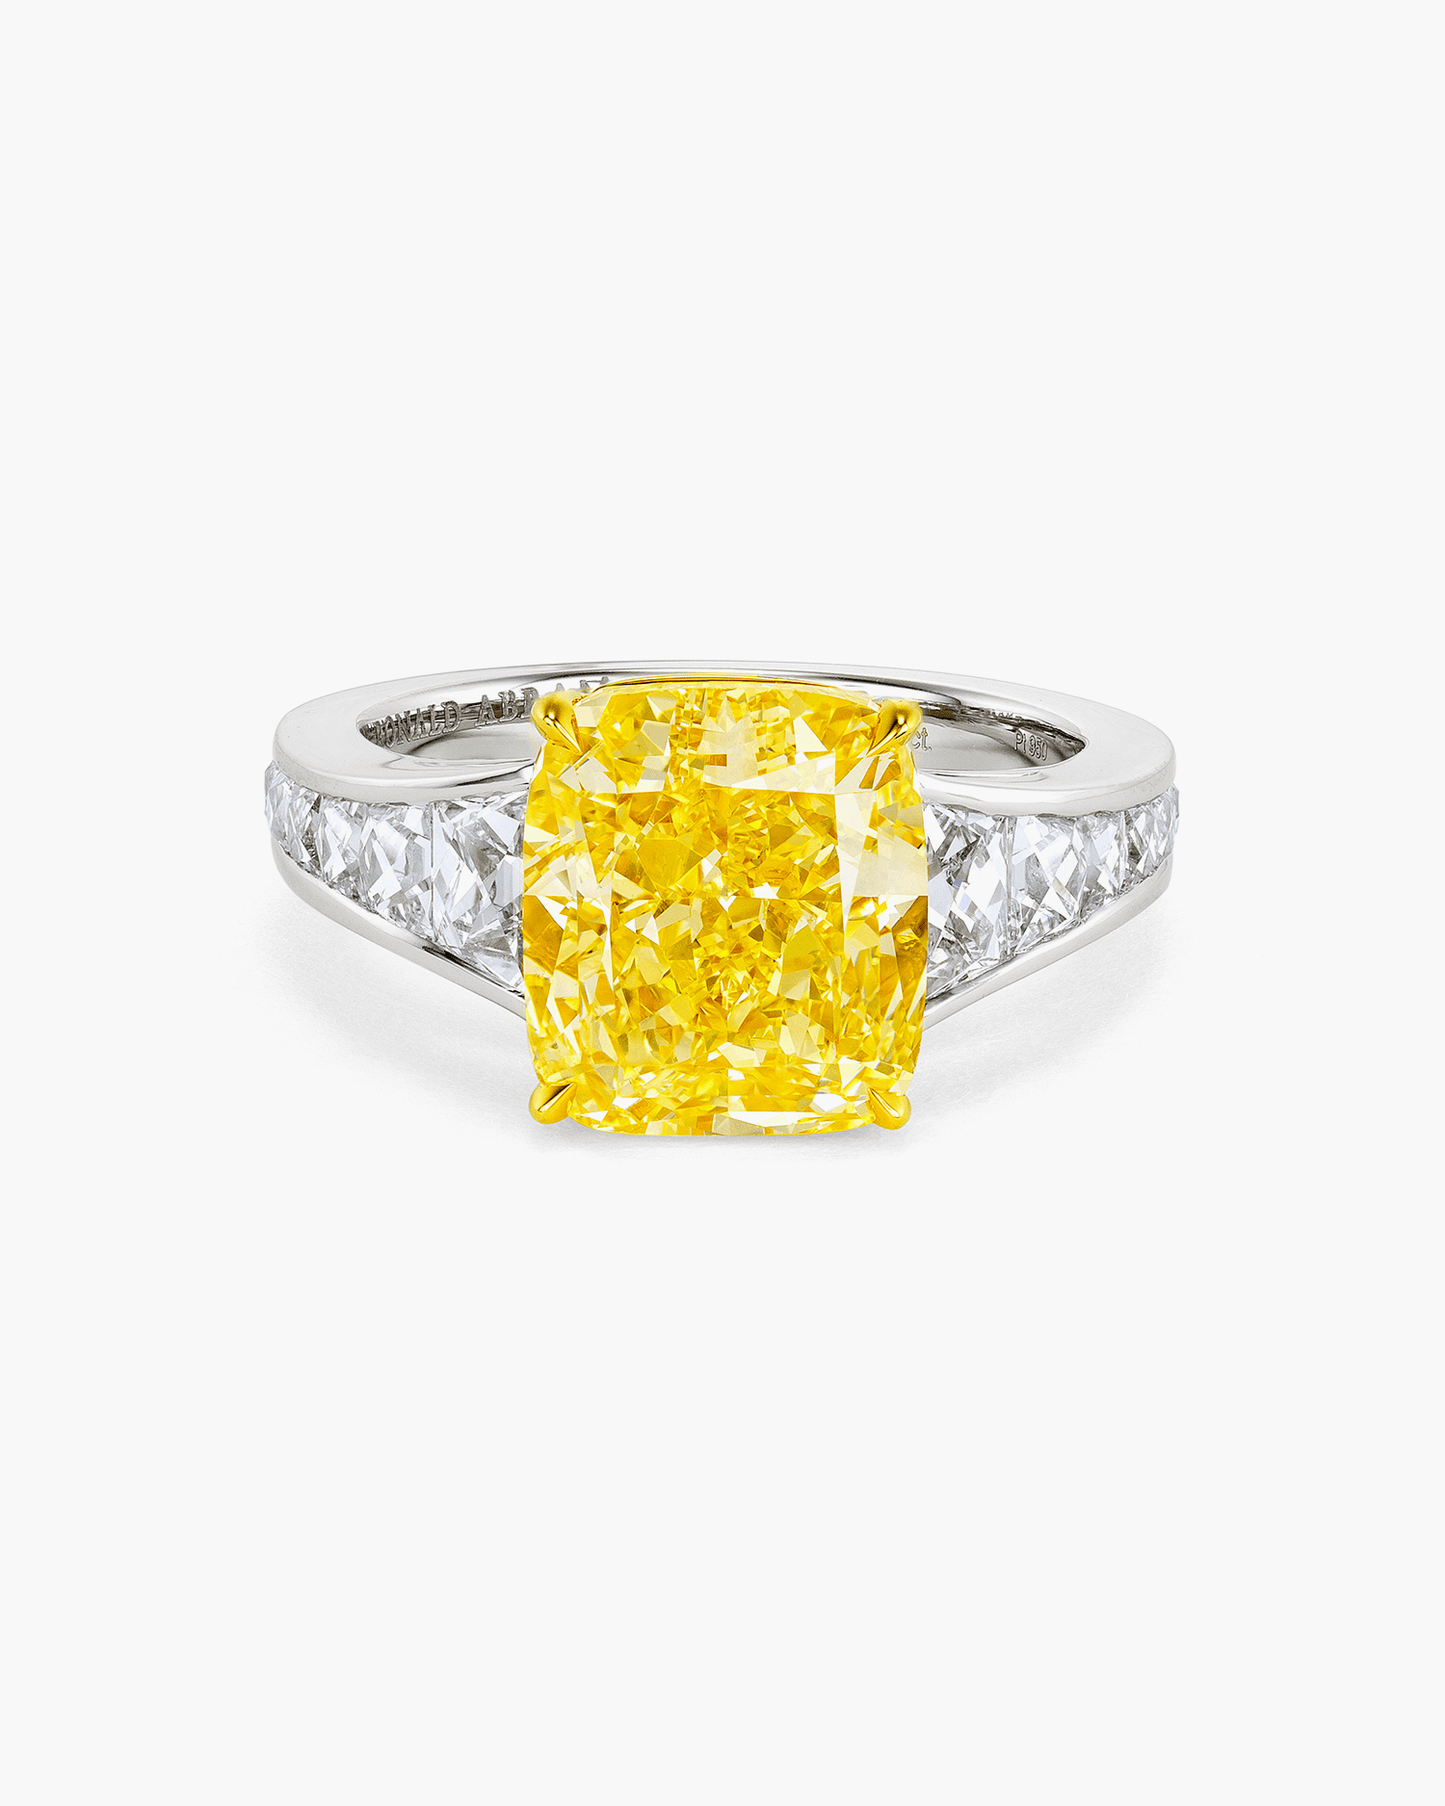 5.02 carat Cushion Cut Yellow and White Diamond Ring